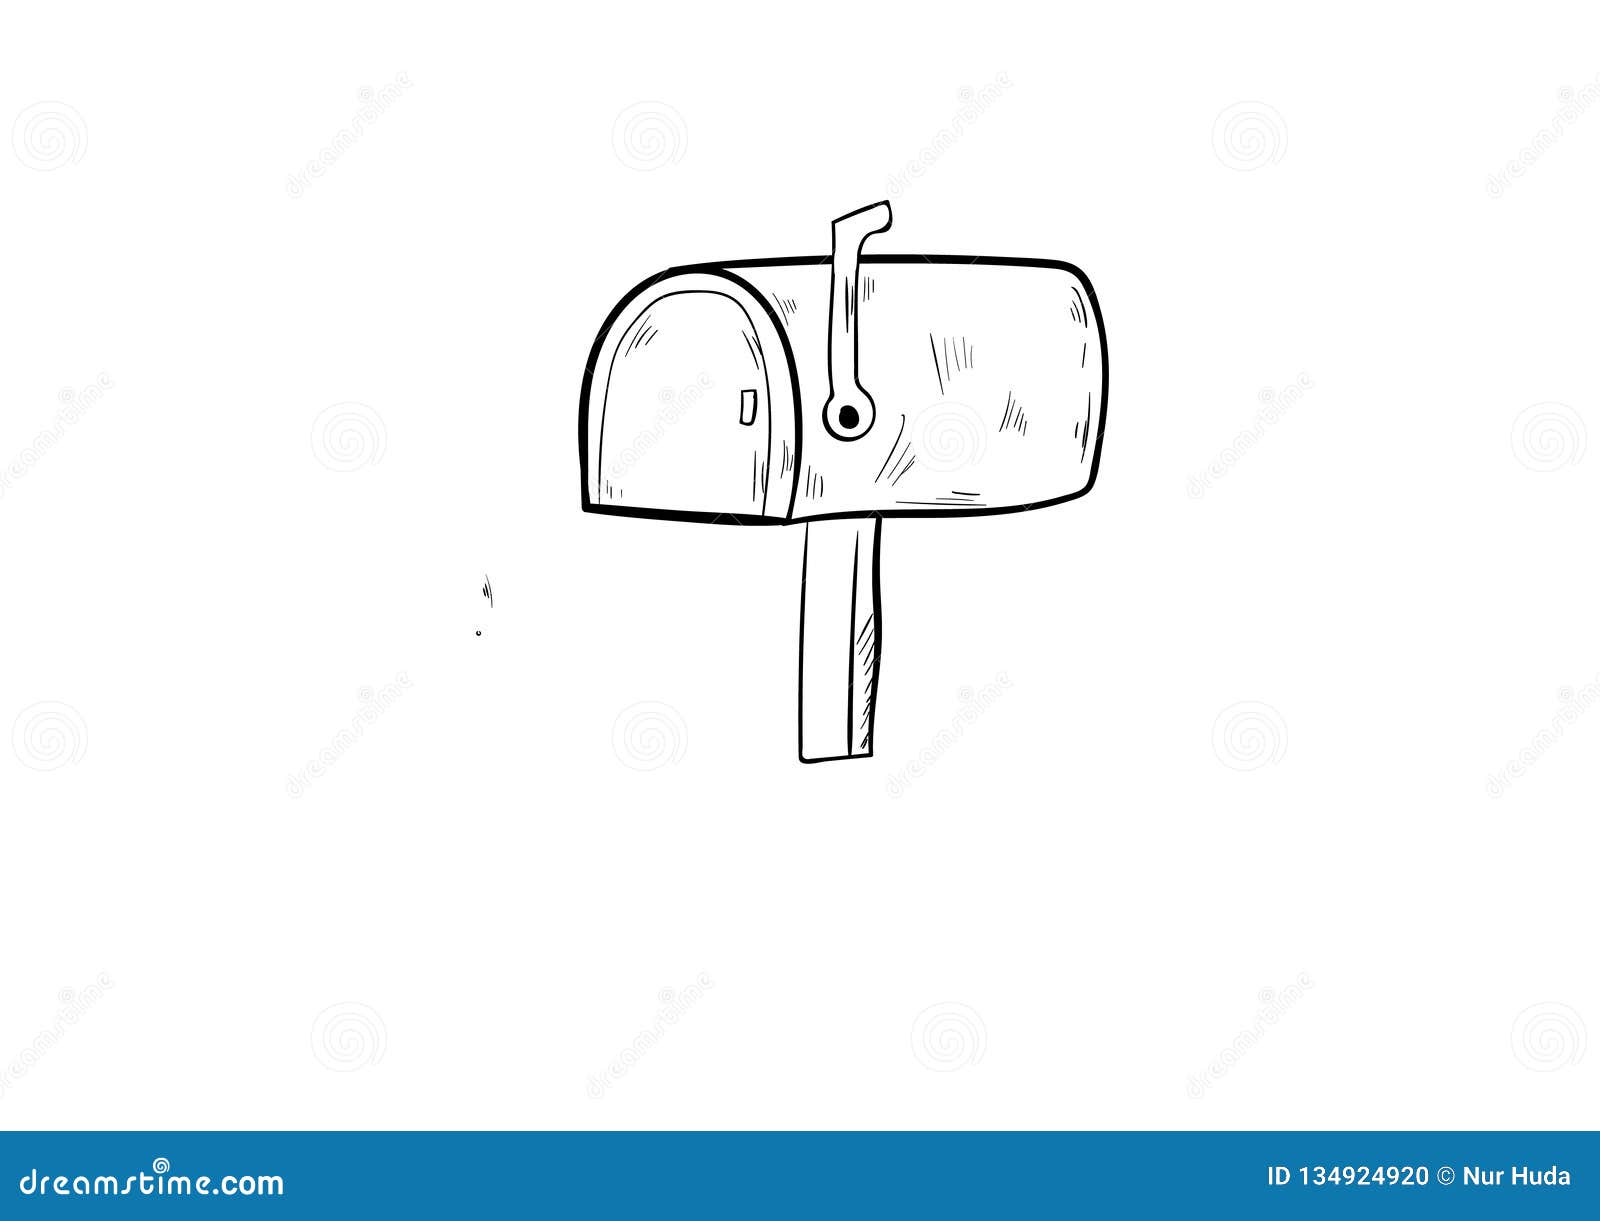 Simple Doodle Of A Mailbox Cartoon Vector | CartoonDealer.com #57000479